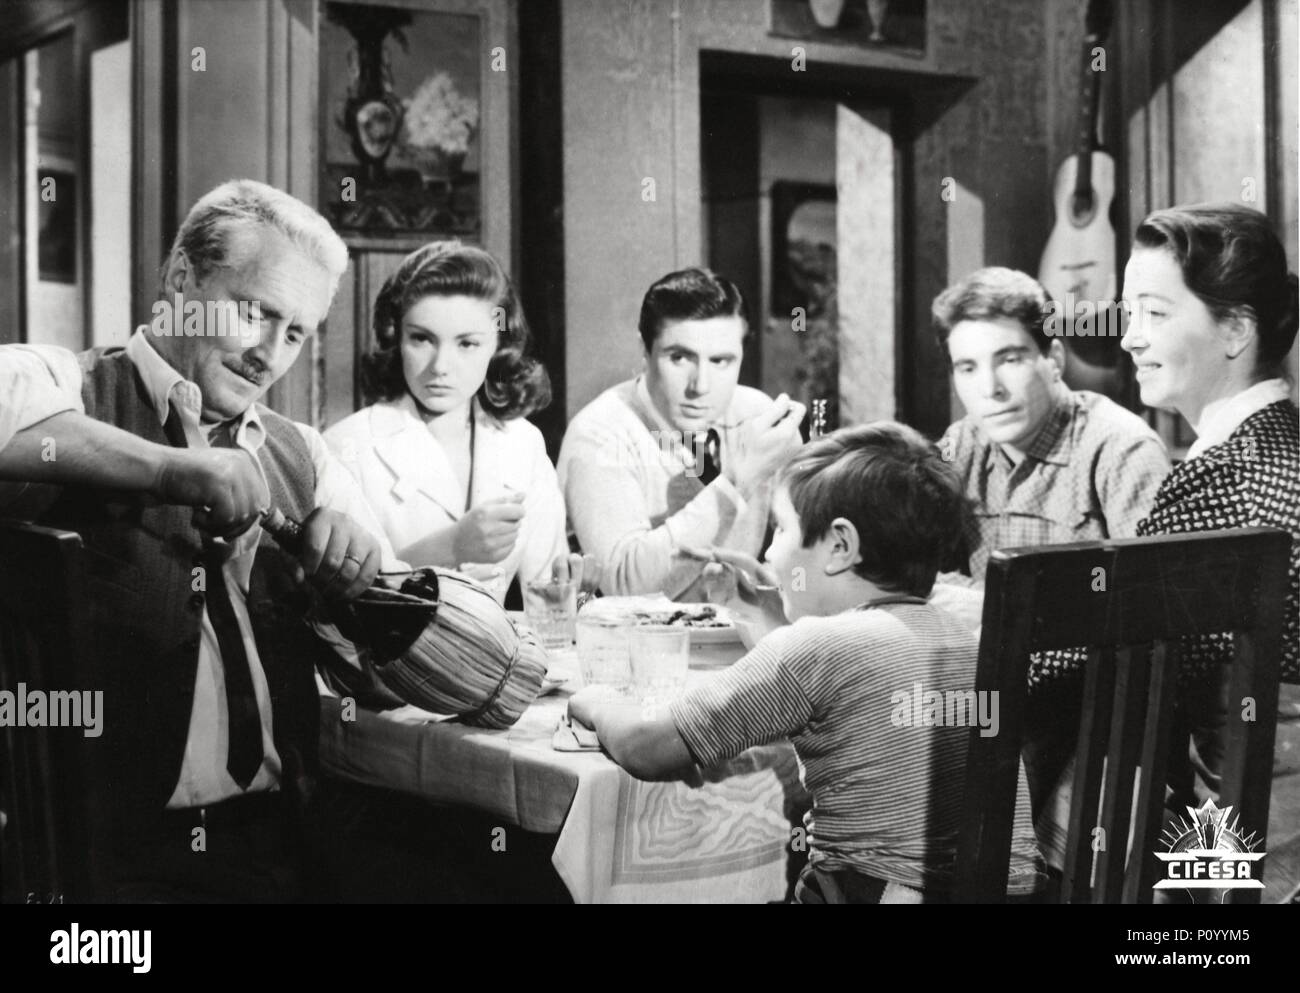 Original Film Title: FERROVIERE, IL.  English Title: THE RAILROAD MAN.  Film Director: PIETRO GERMI.  Year: 1956.  Stars: SYLVIA KOSCINA; PIETRO GERMI. Credit: DE LAURENTIIS/PONTI/ENIC / Album Stock Photo